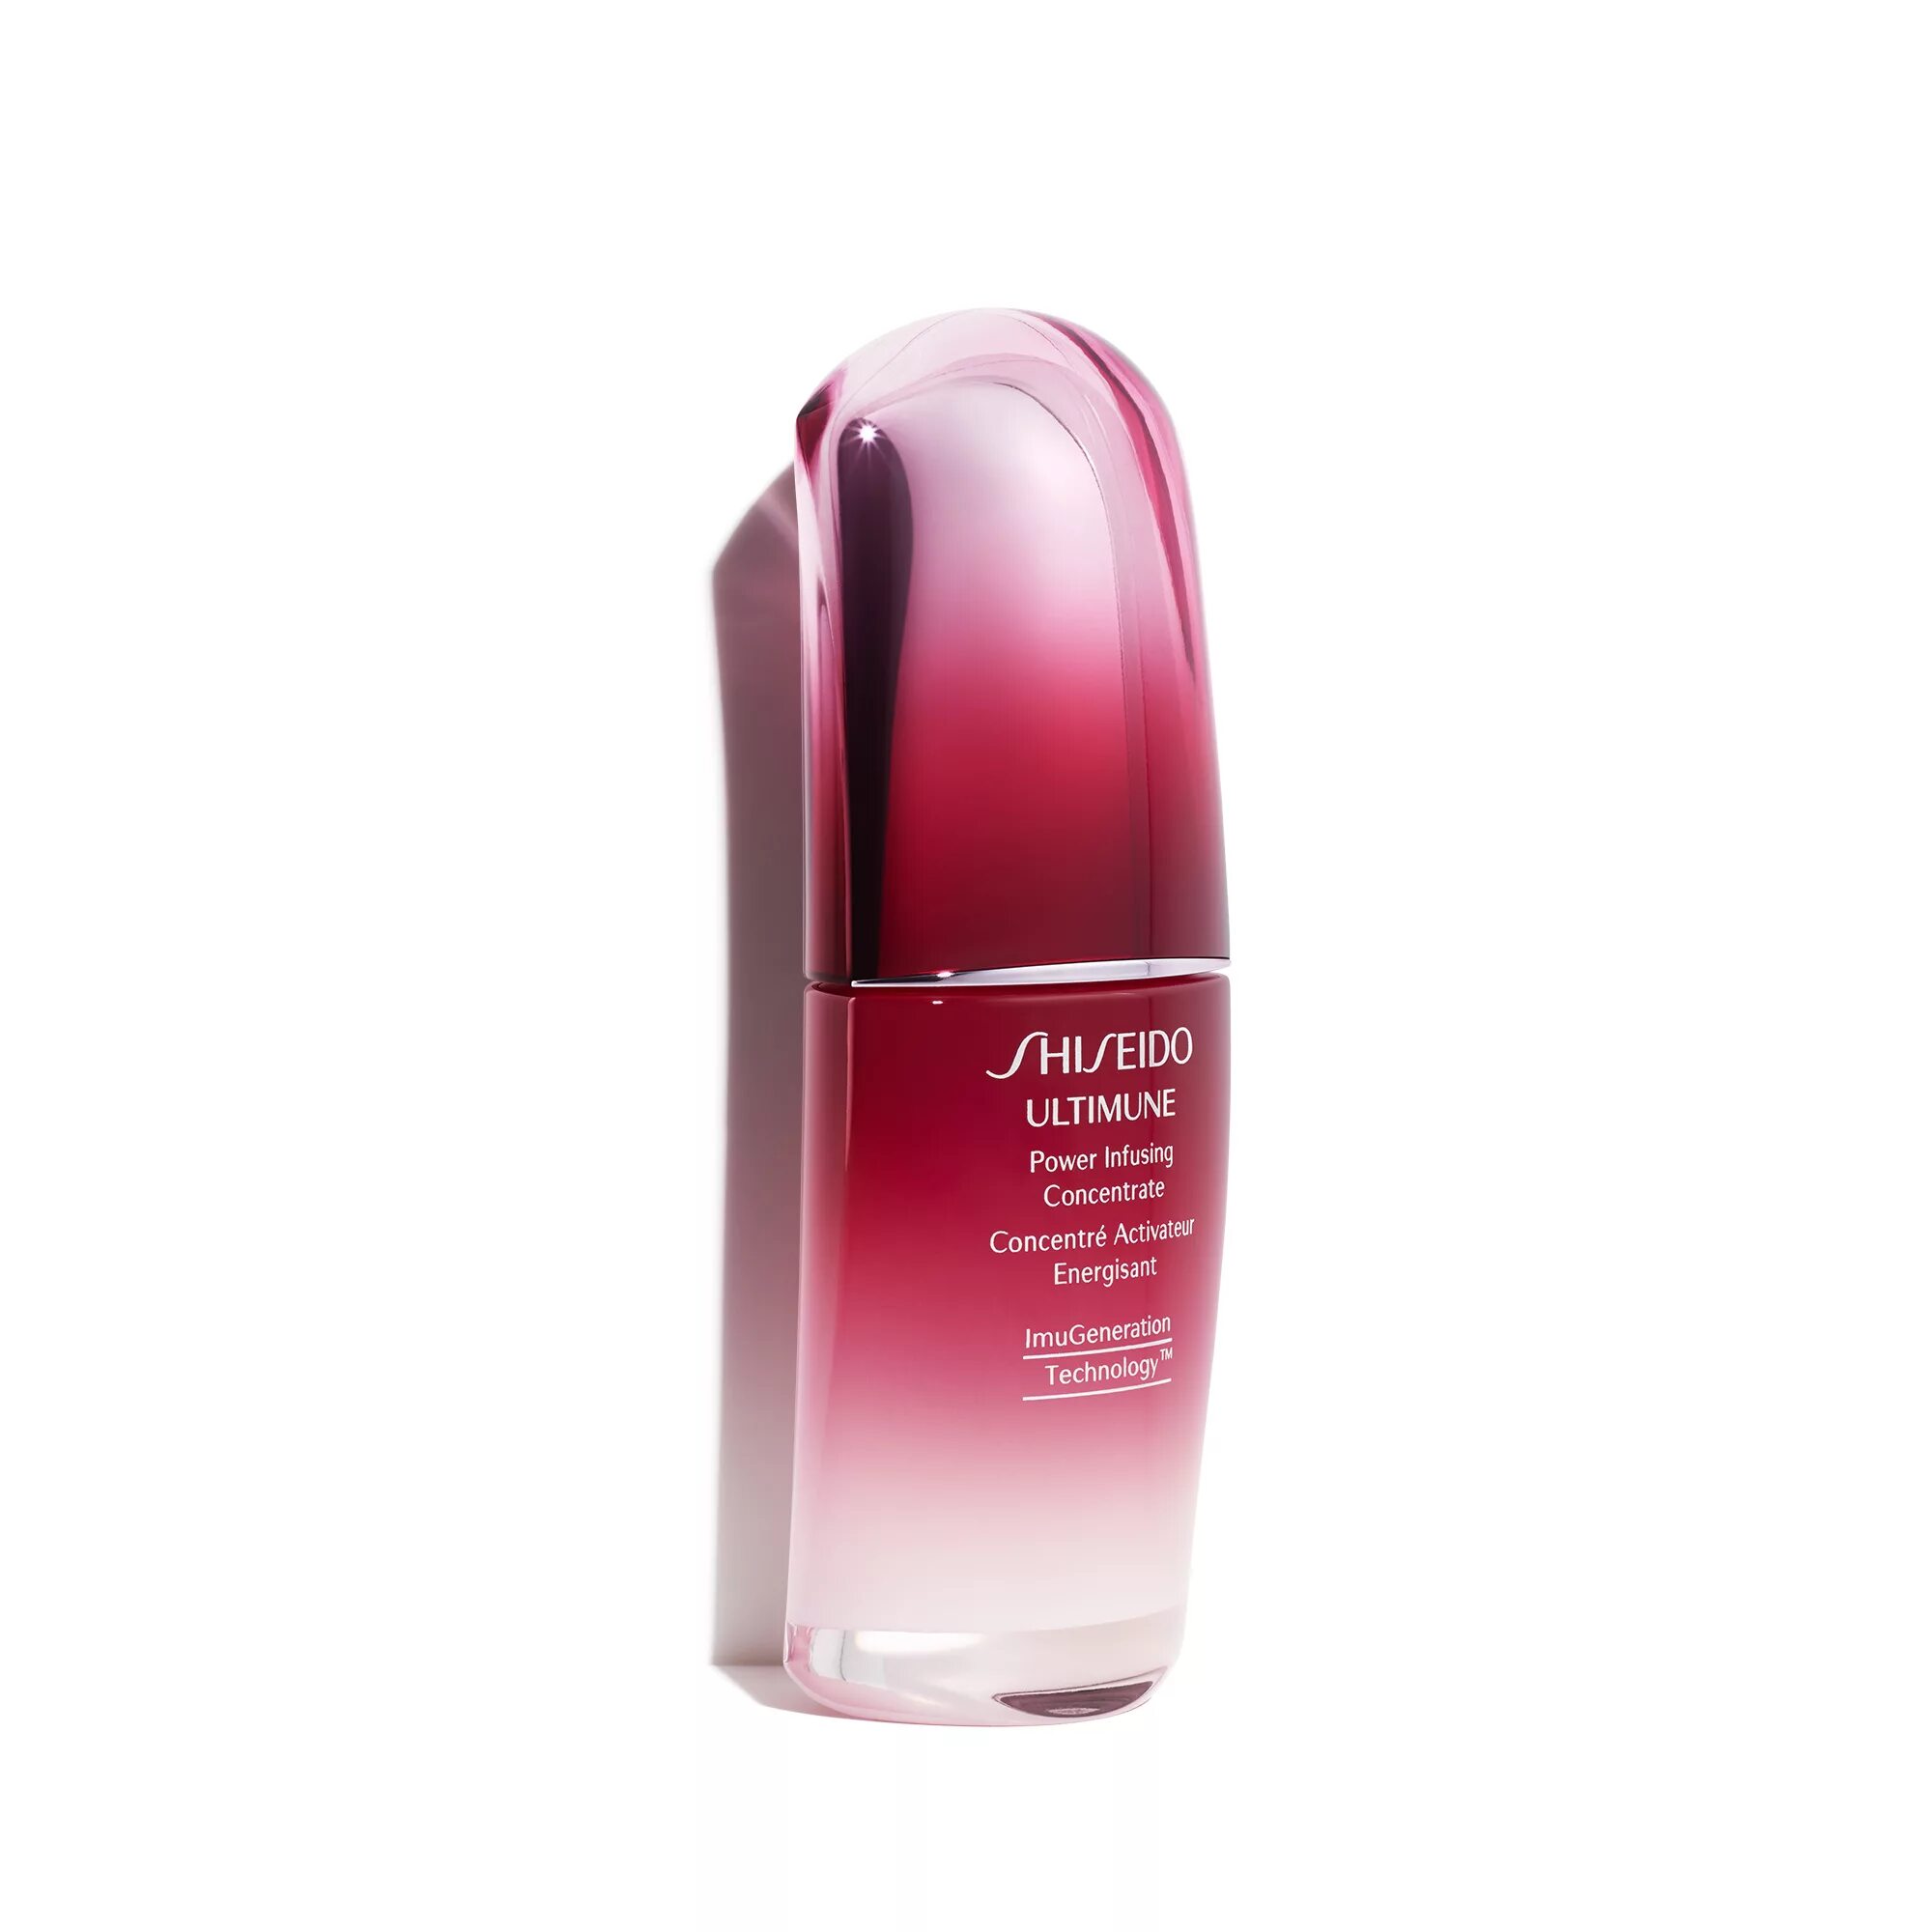 Ультимьюн шисейдо. Shiseido флюид 50. Шисейдо 130. Shiseido Ultimune Power infusing Serum. Shiseido 50